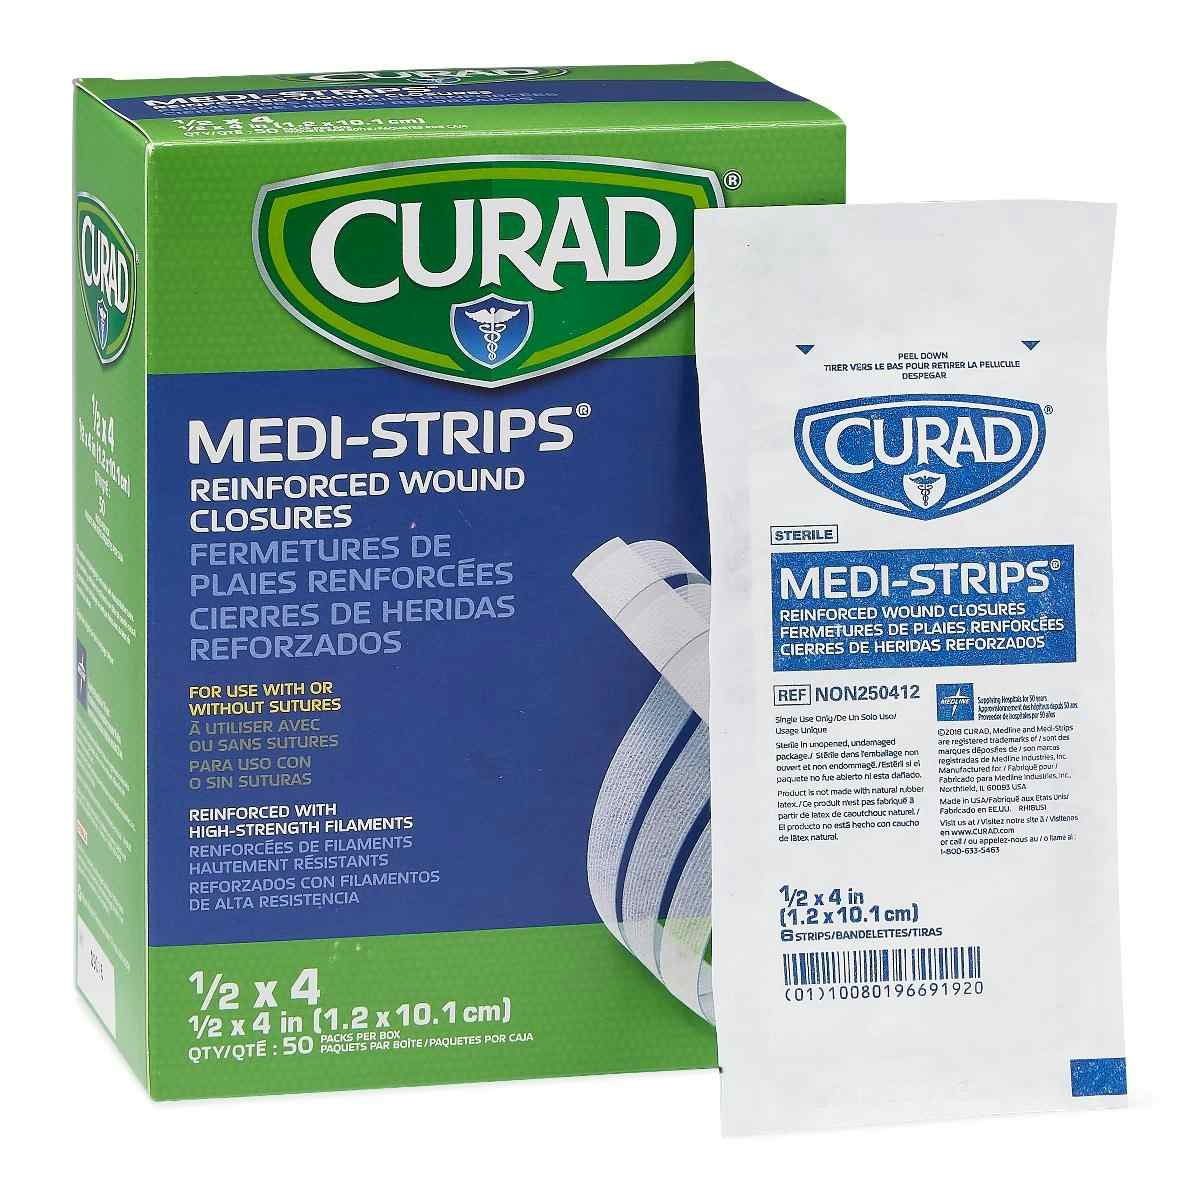 Curad Medi-Strip Reinforced Wound Closures, NON250412Z, 1/2" X 4" - Box of 300